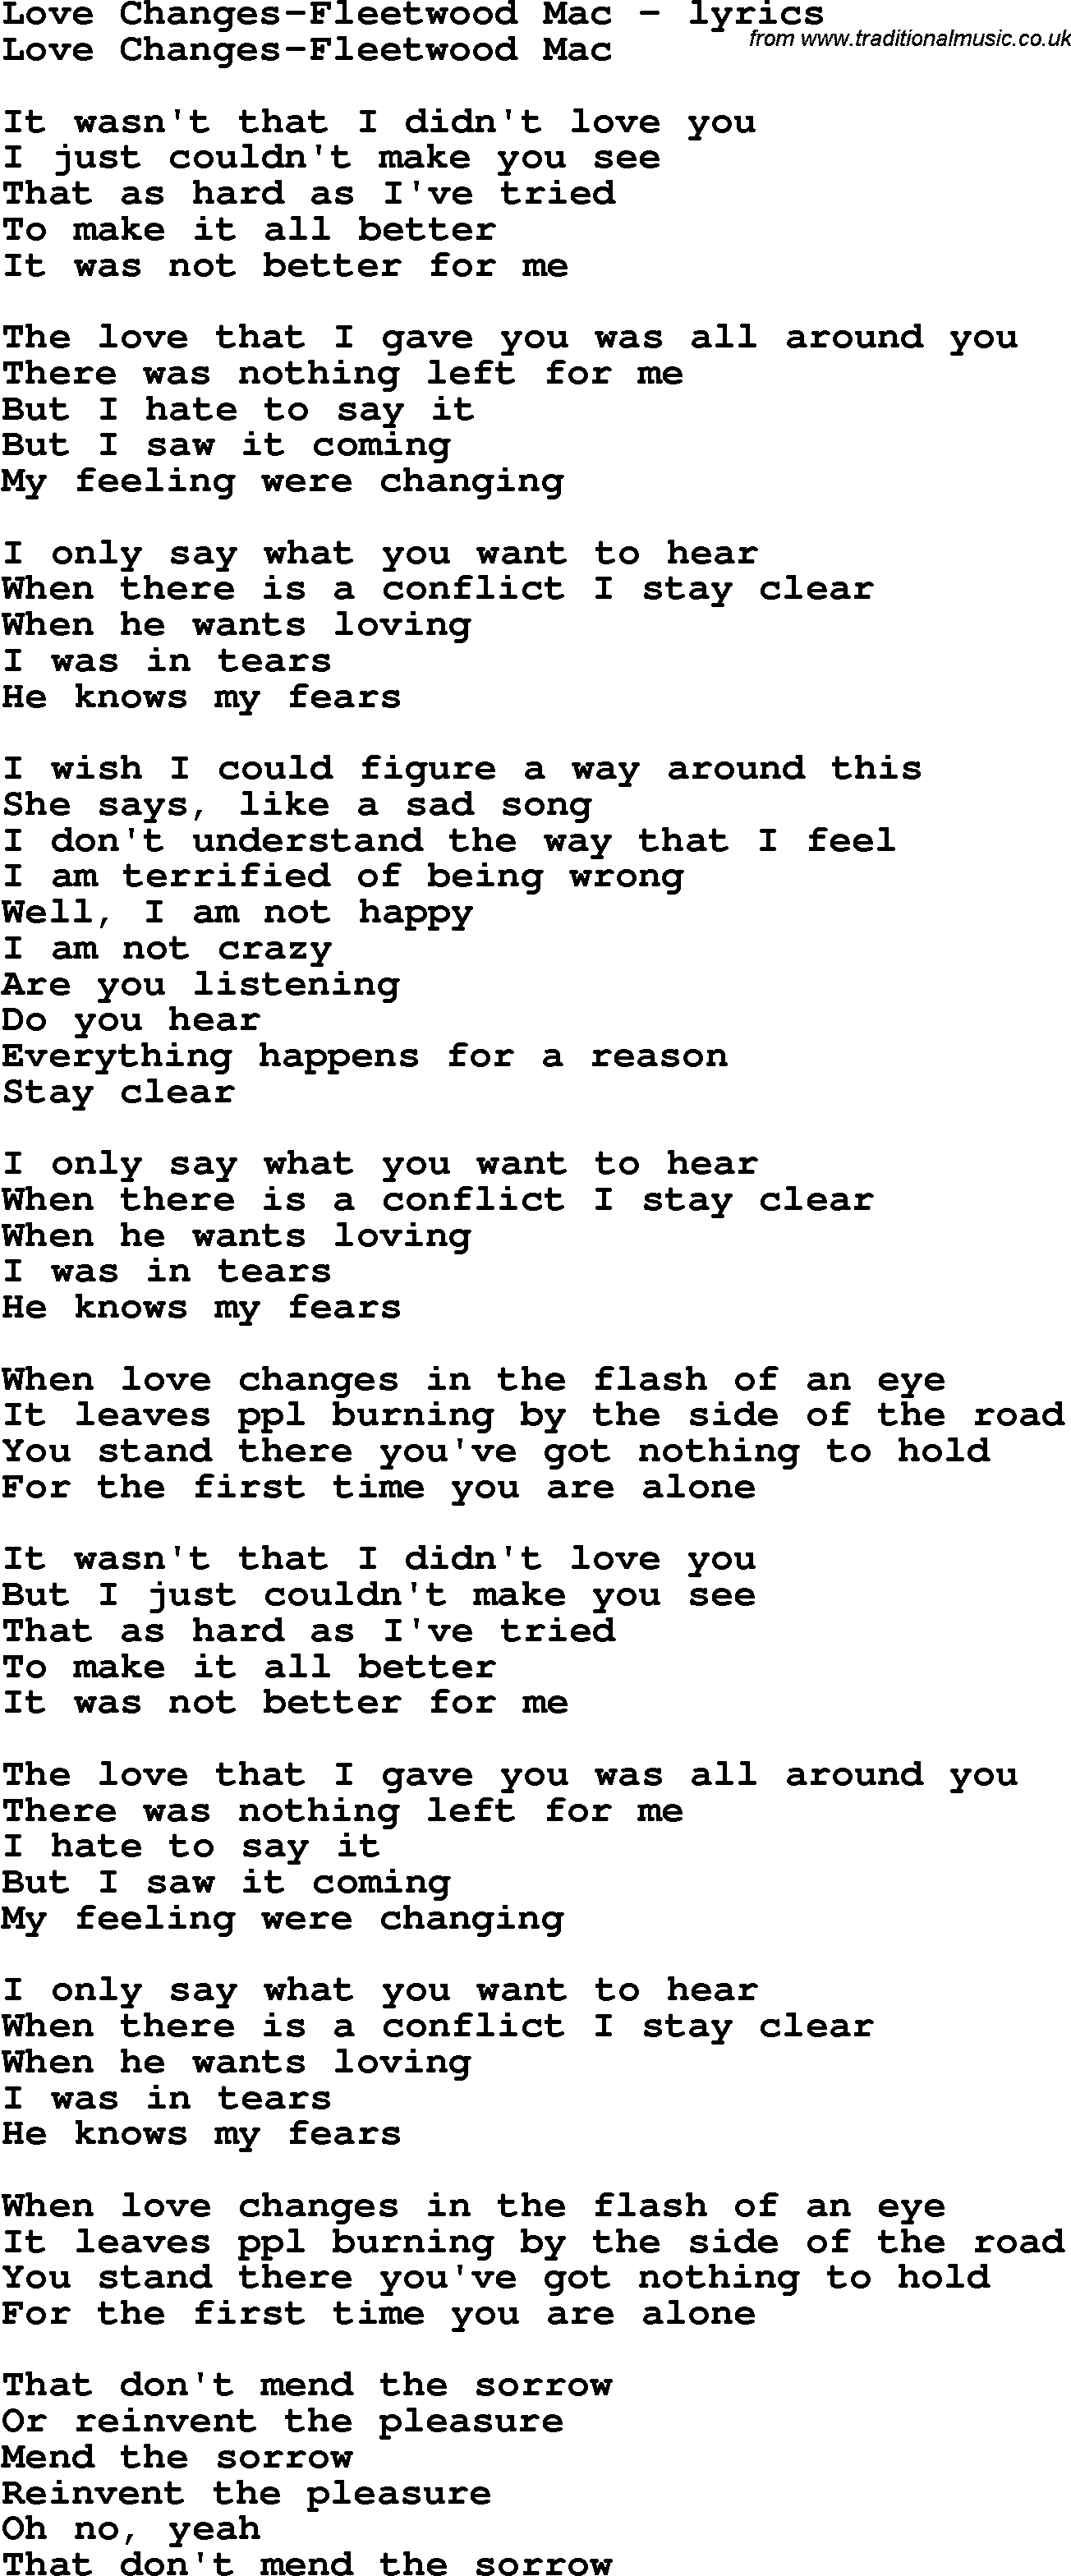 Fleetwood mac songs lyrics